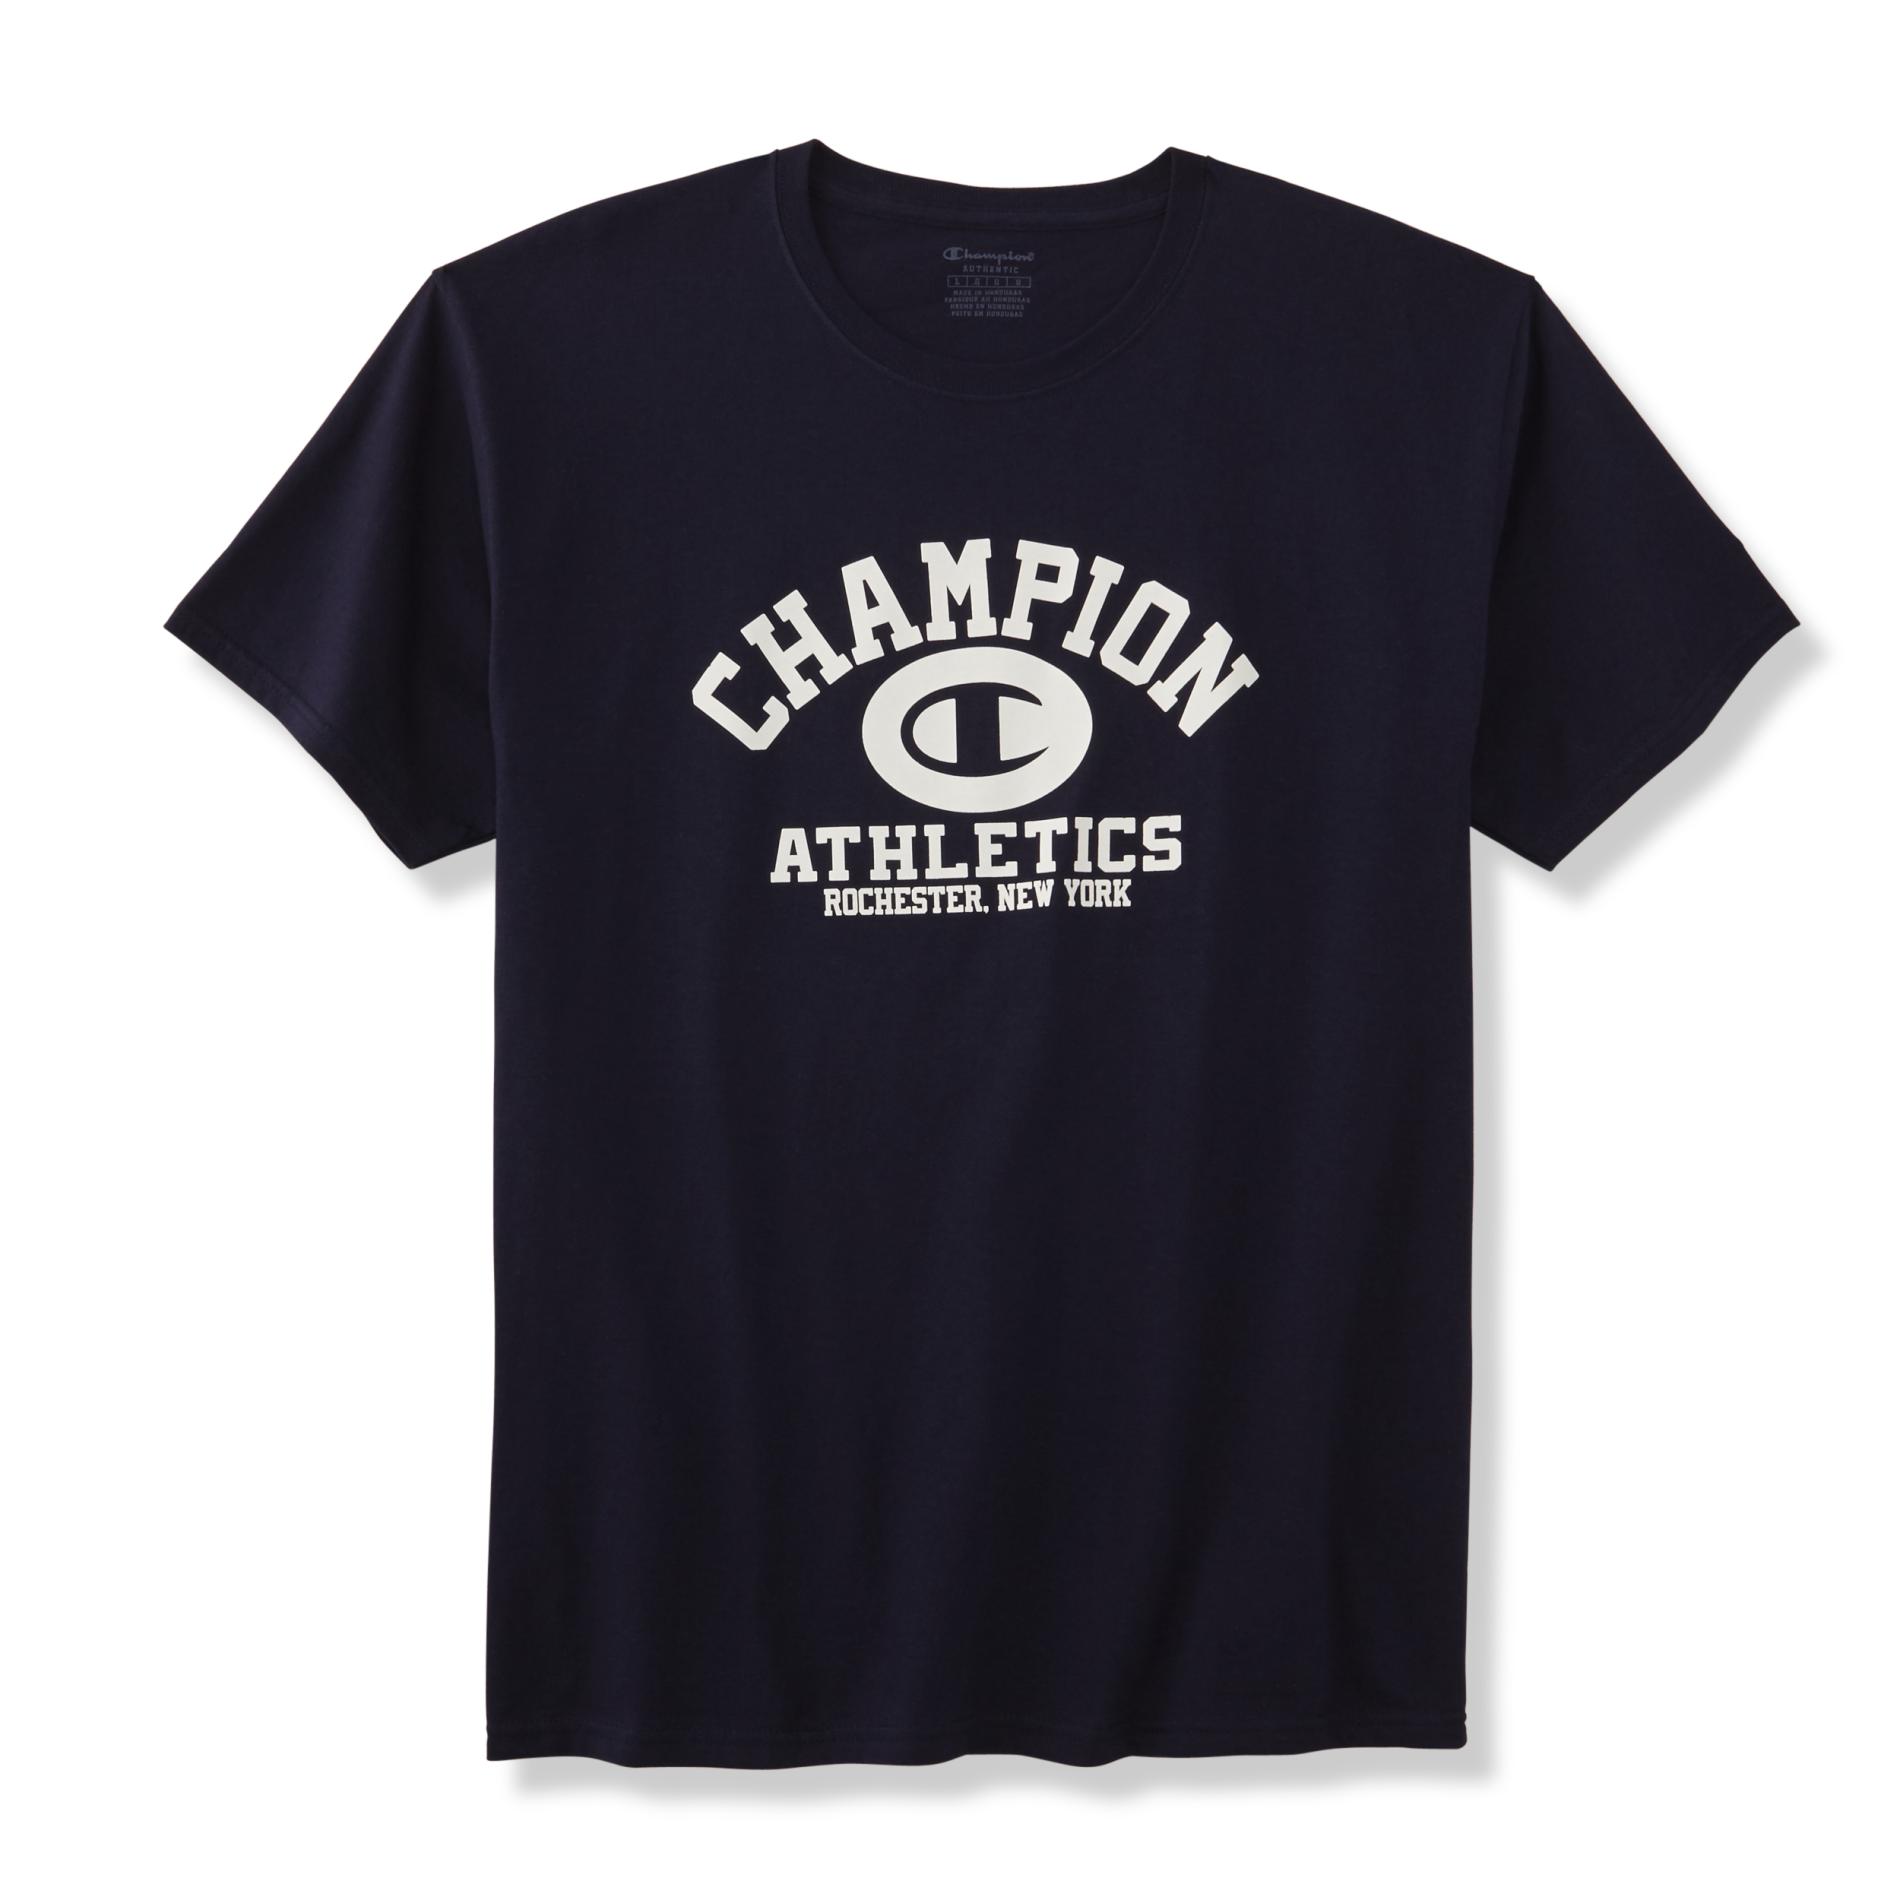 sears champion shirt